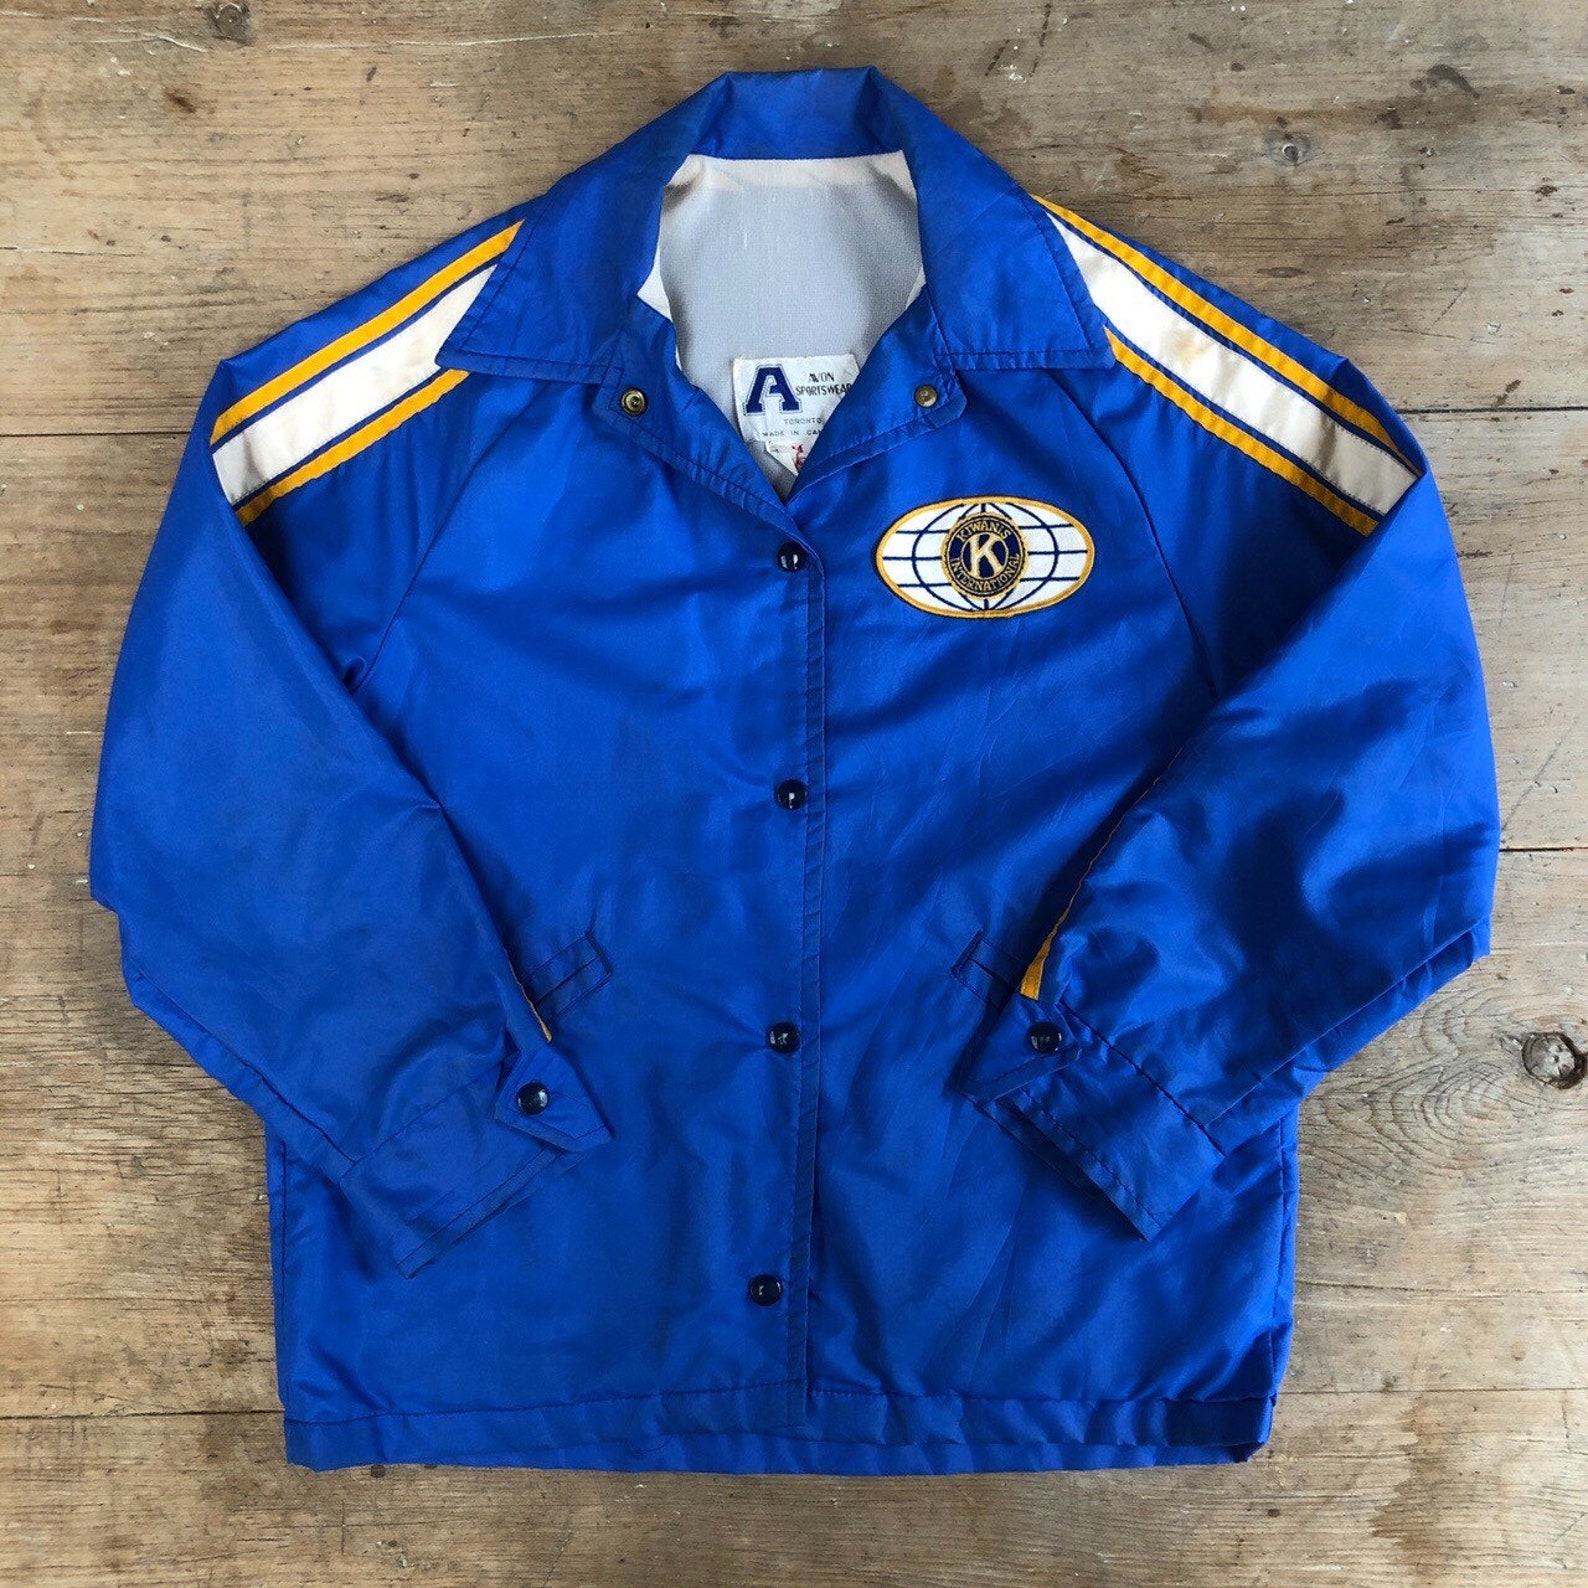 Vintage 1960s/70s lightweight varsity jacket | Etsy